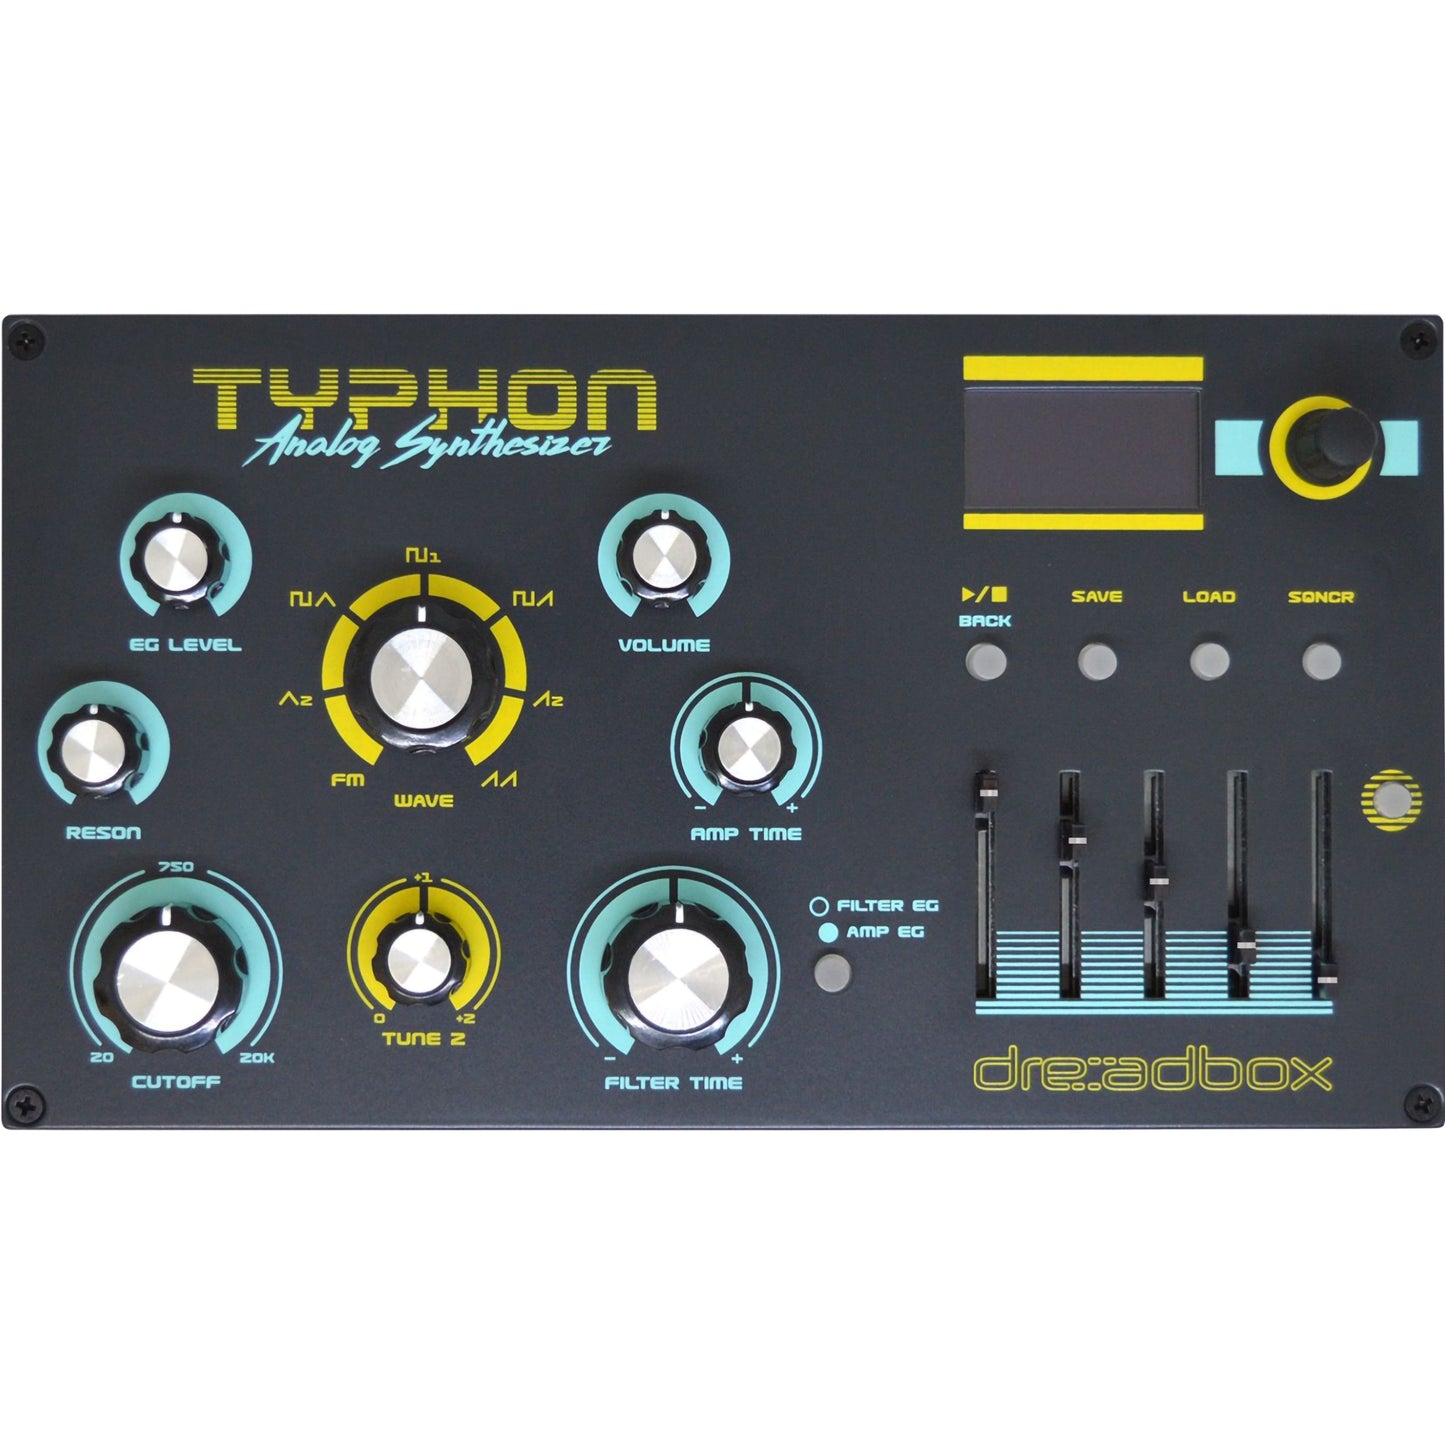 Dreadbox Typhon Monophonic USB powered Analog Synthesizer